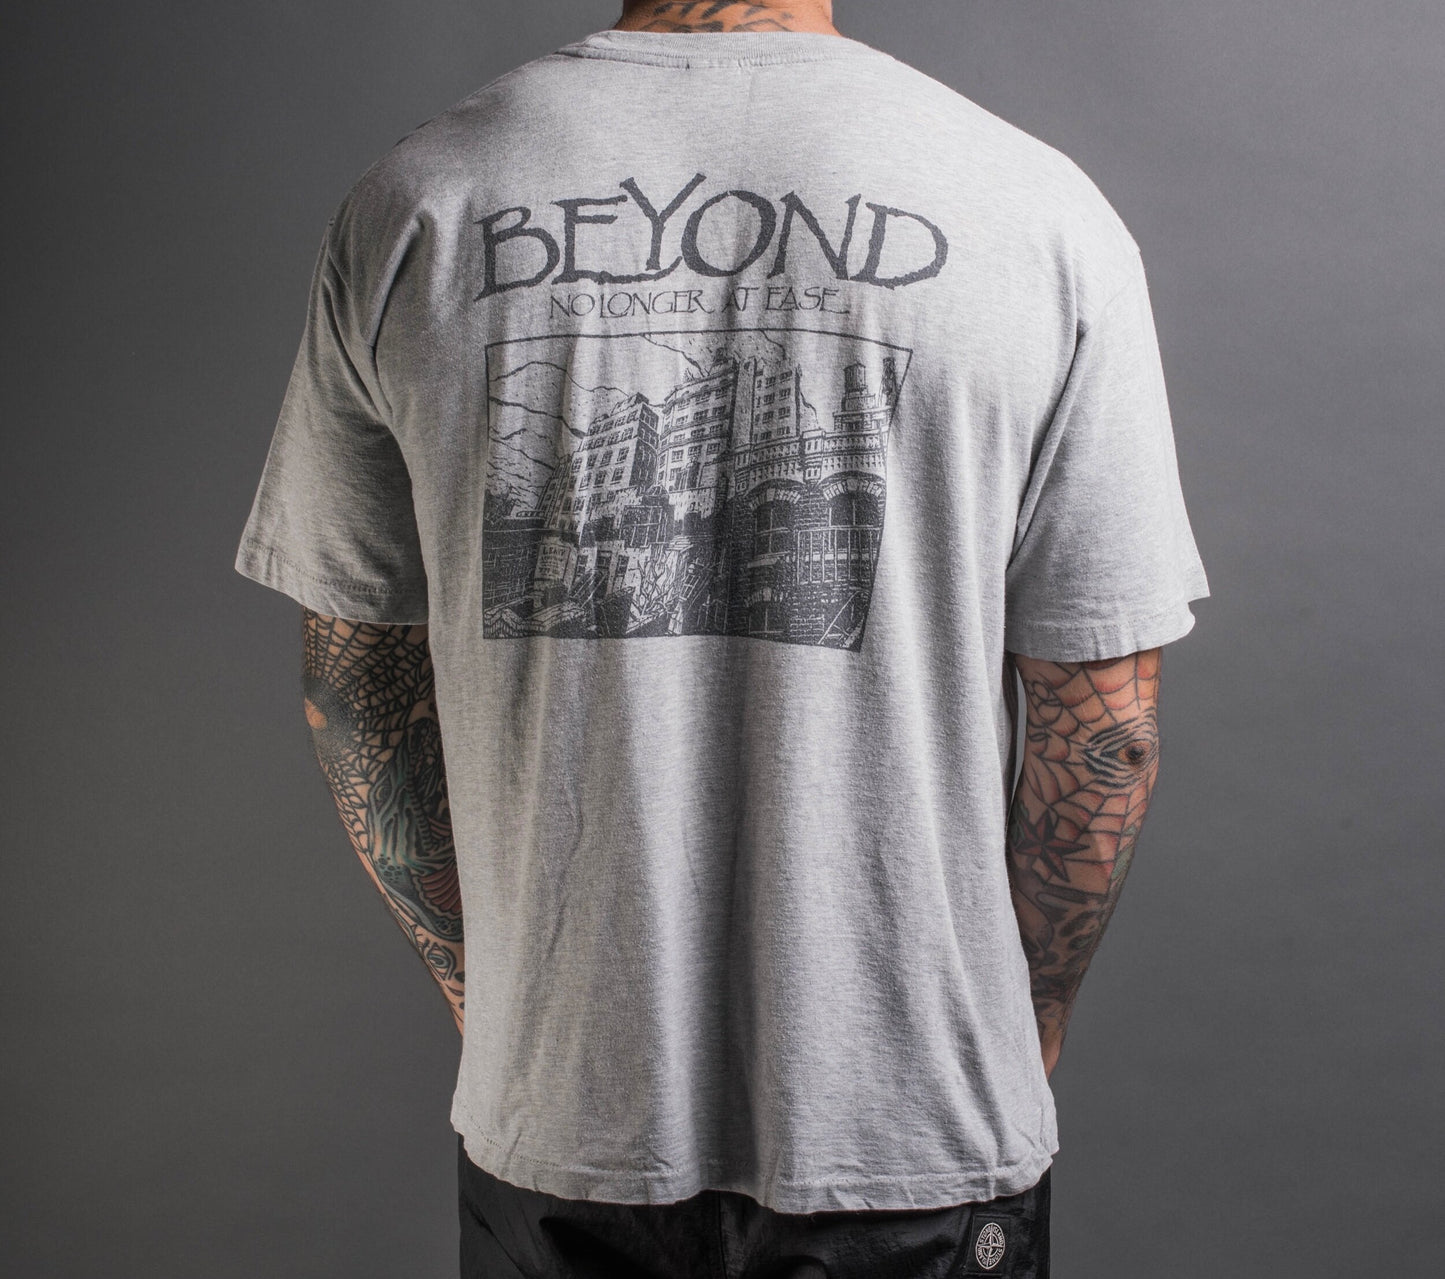 Vintage 90’s Beyond No Longer at Ease T-Shirt